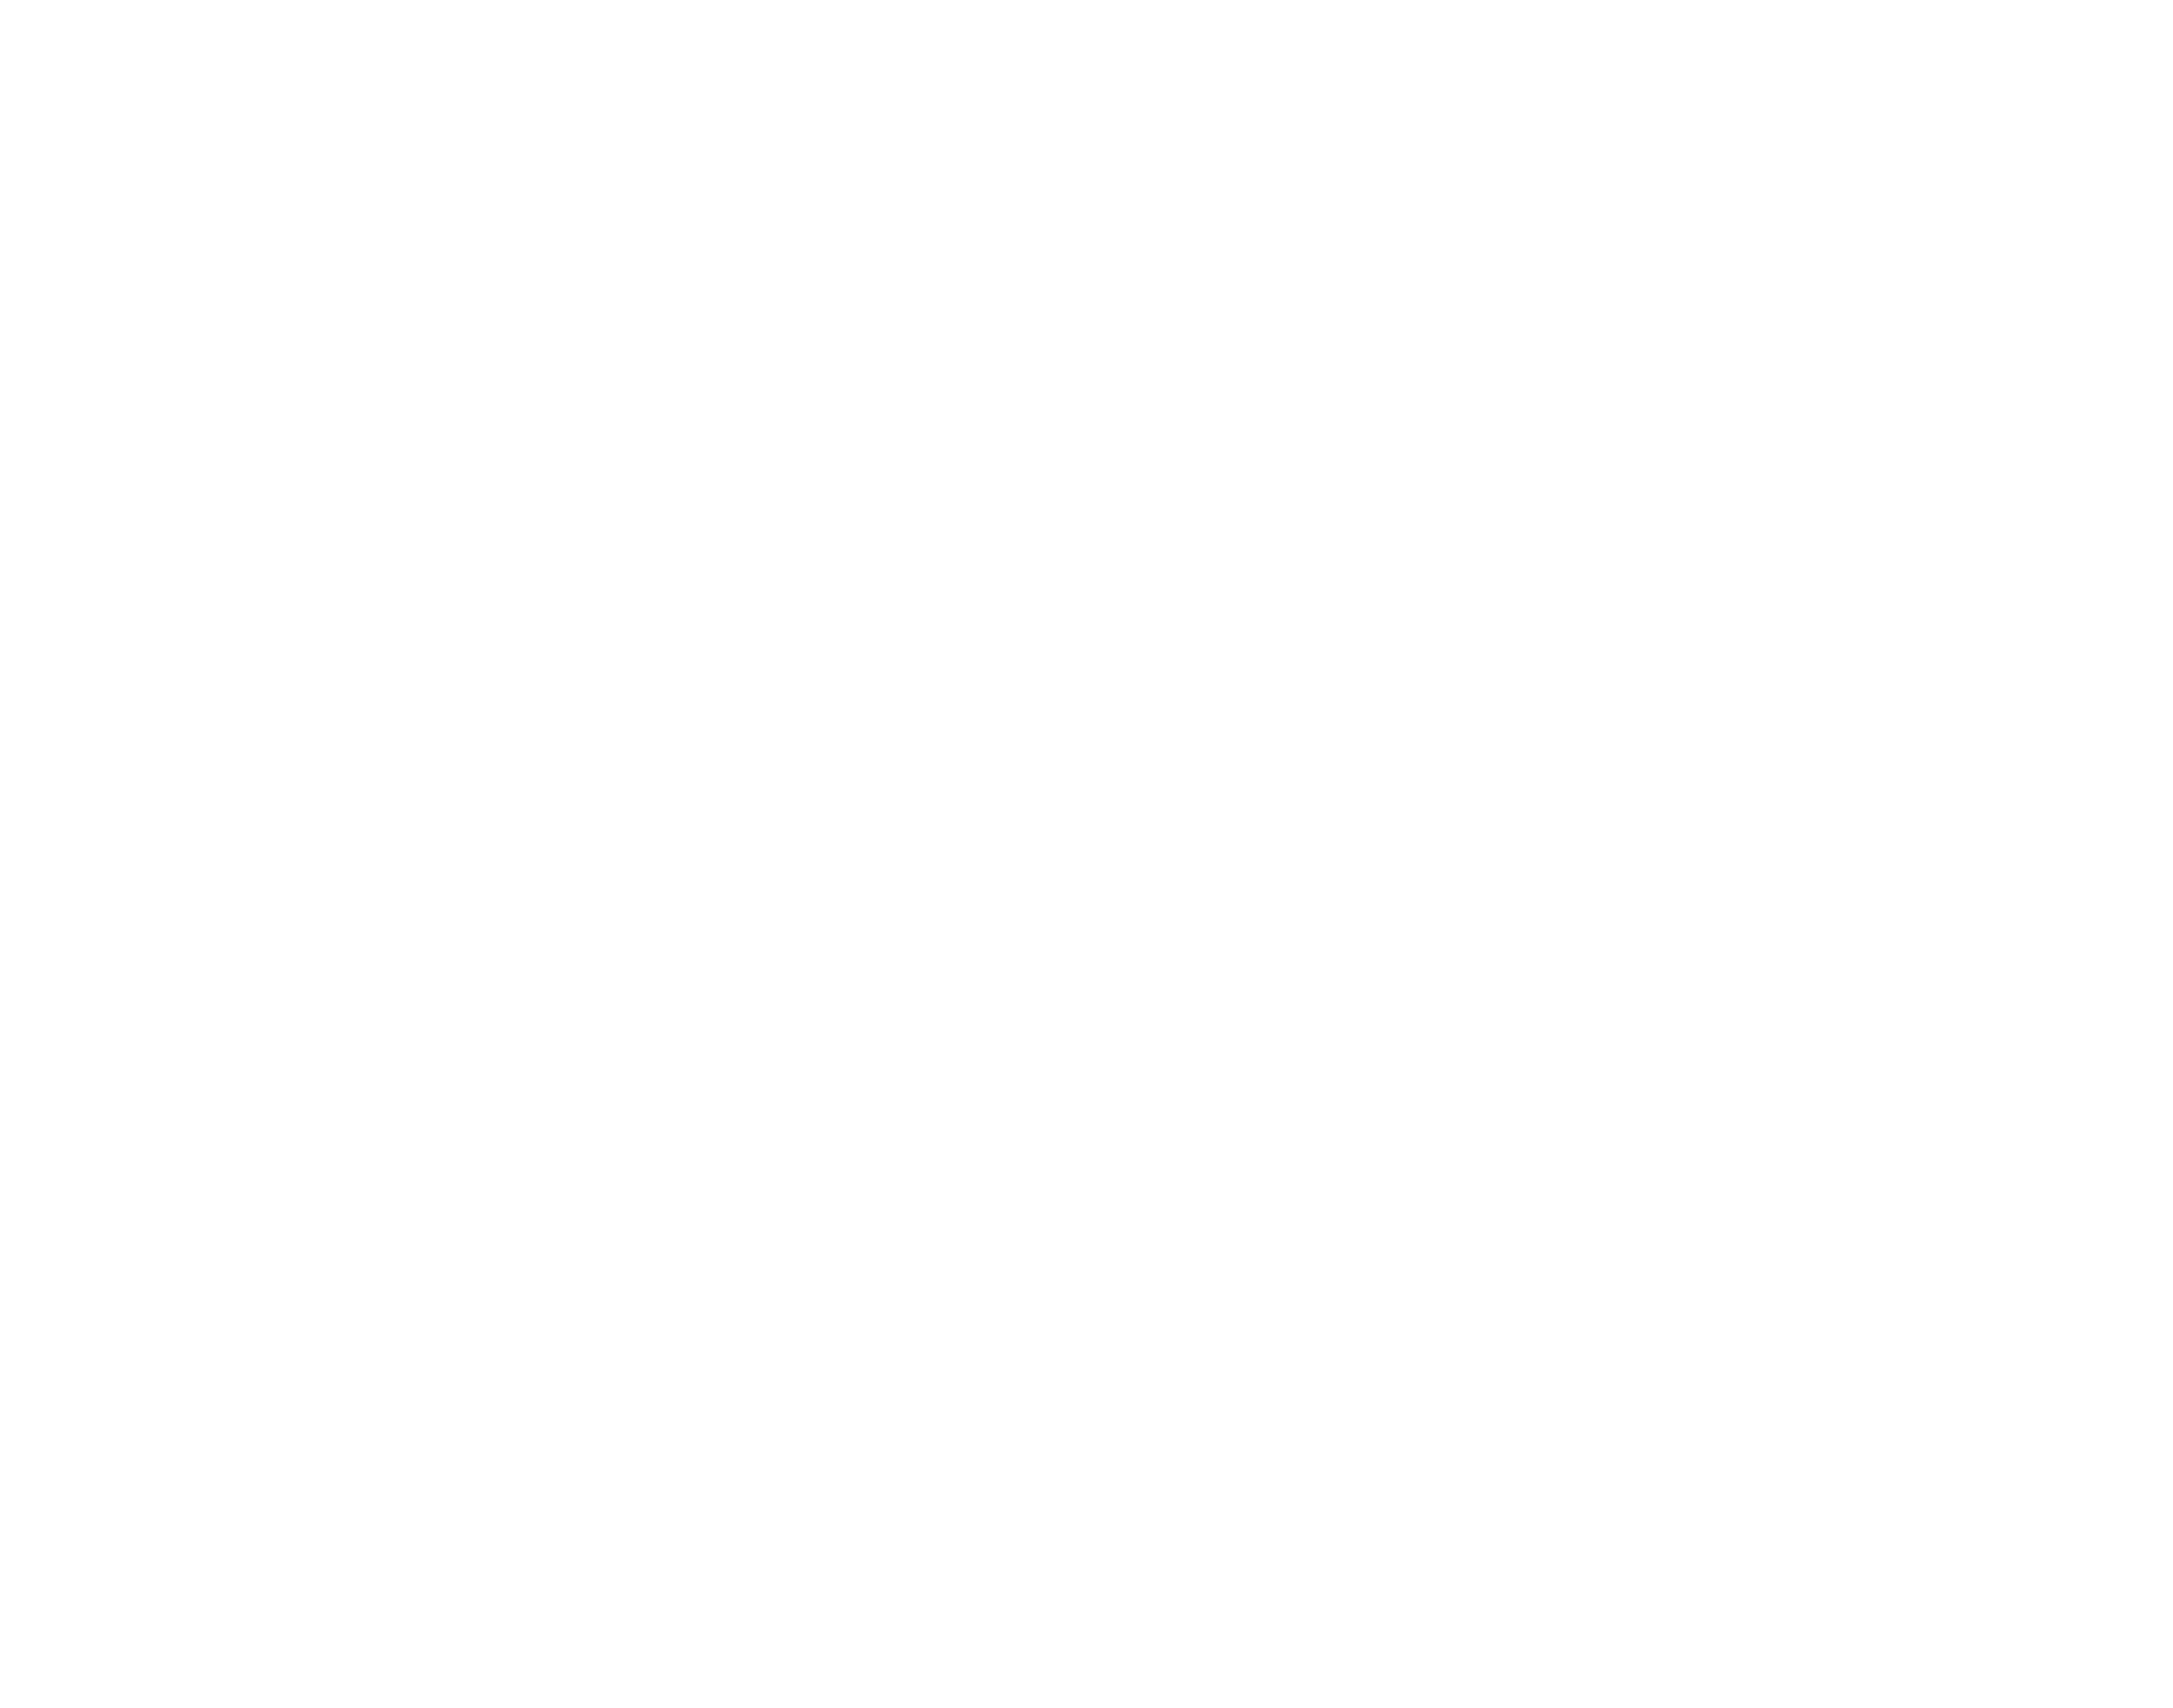 Eurolow Society